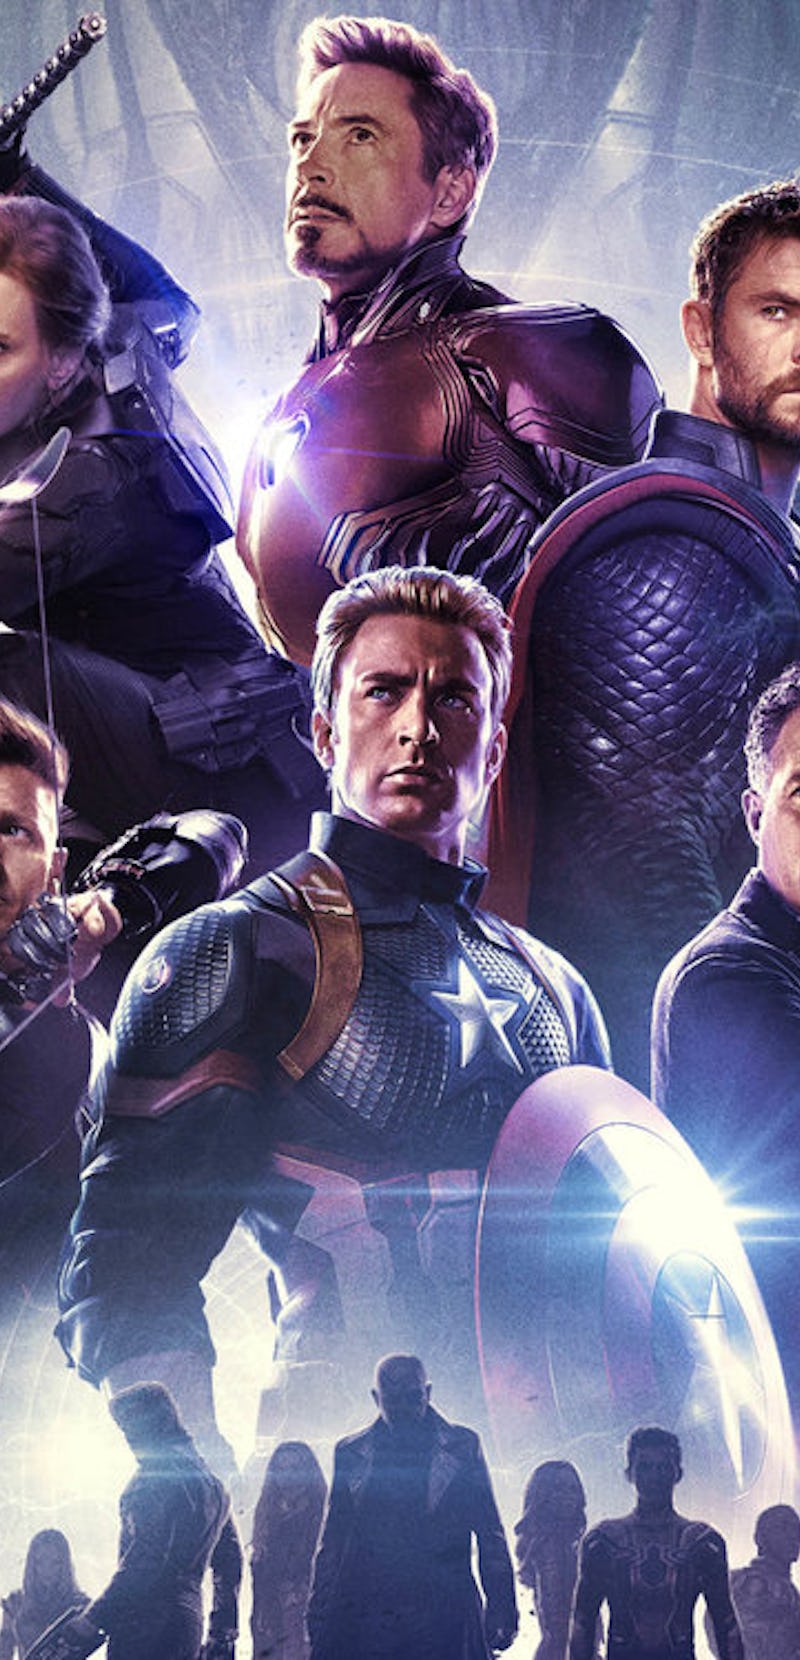 Avengers Infinity war character poster